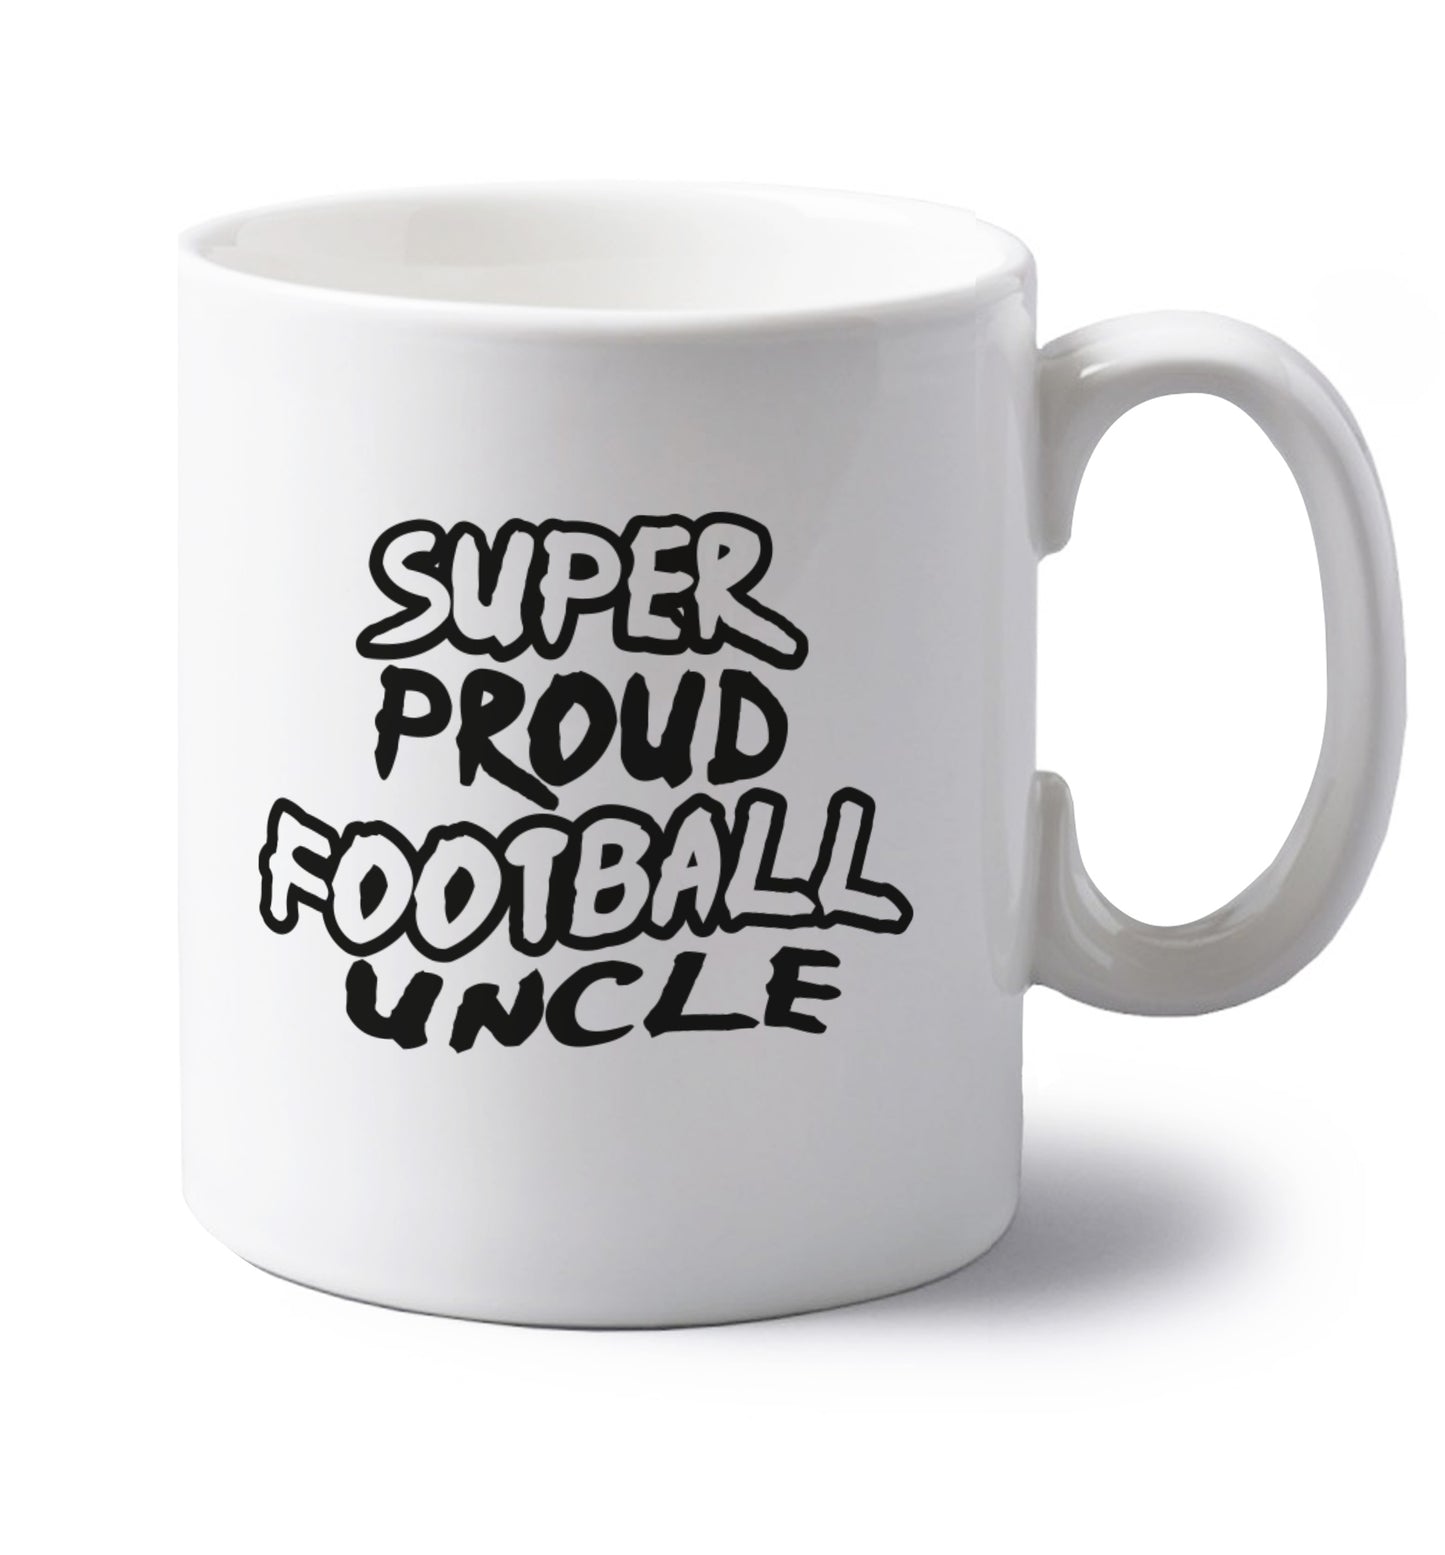 Super proud football uncle left handed white ceramic mug 